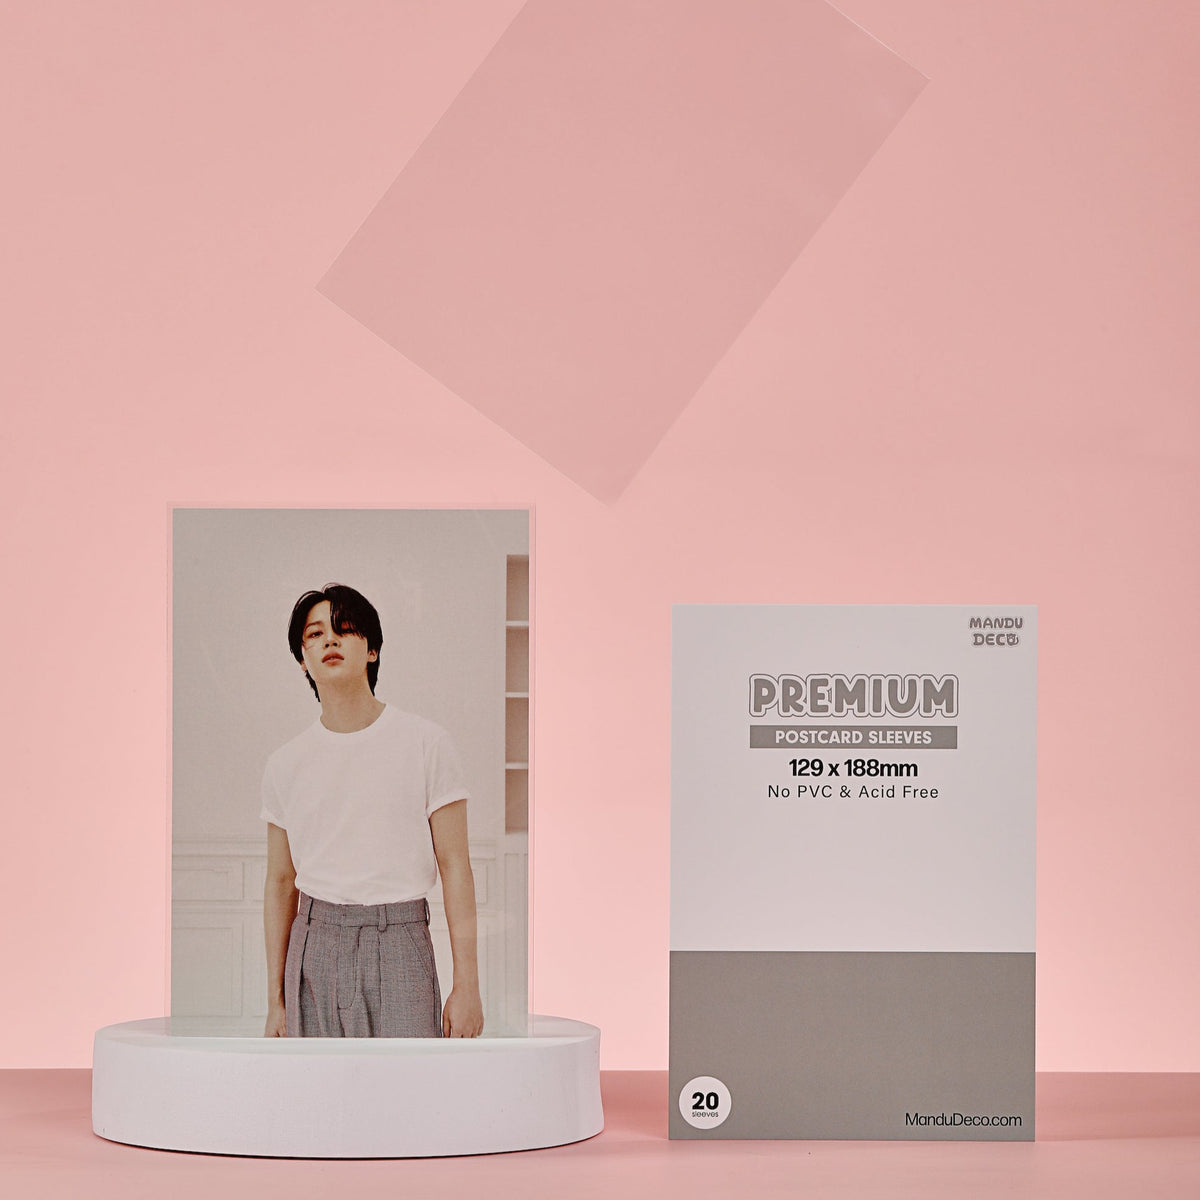 What postcards fit @Mandu Deco premium poscard sleeves? #mandudeco #ph